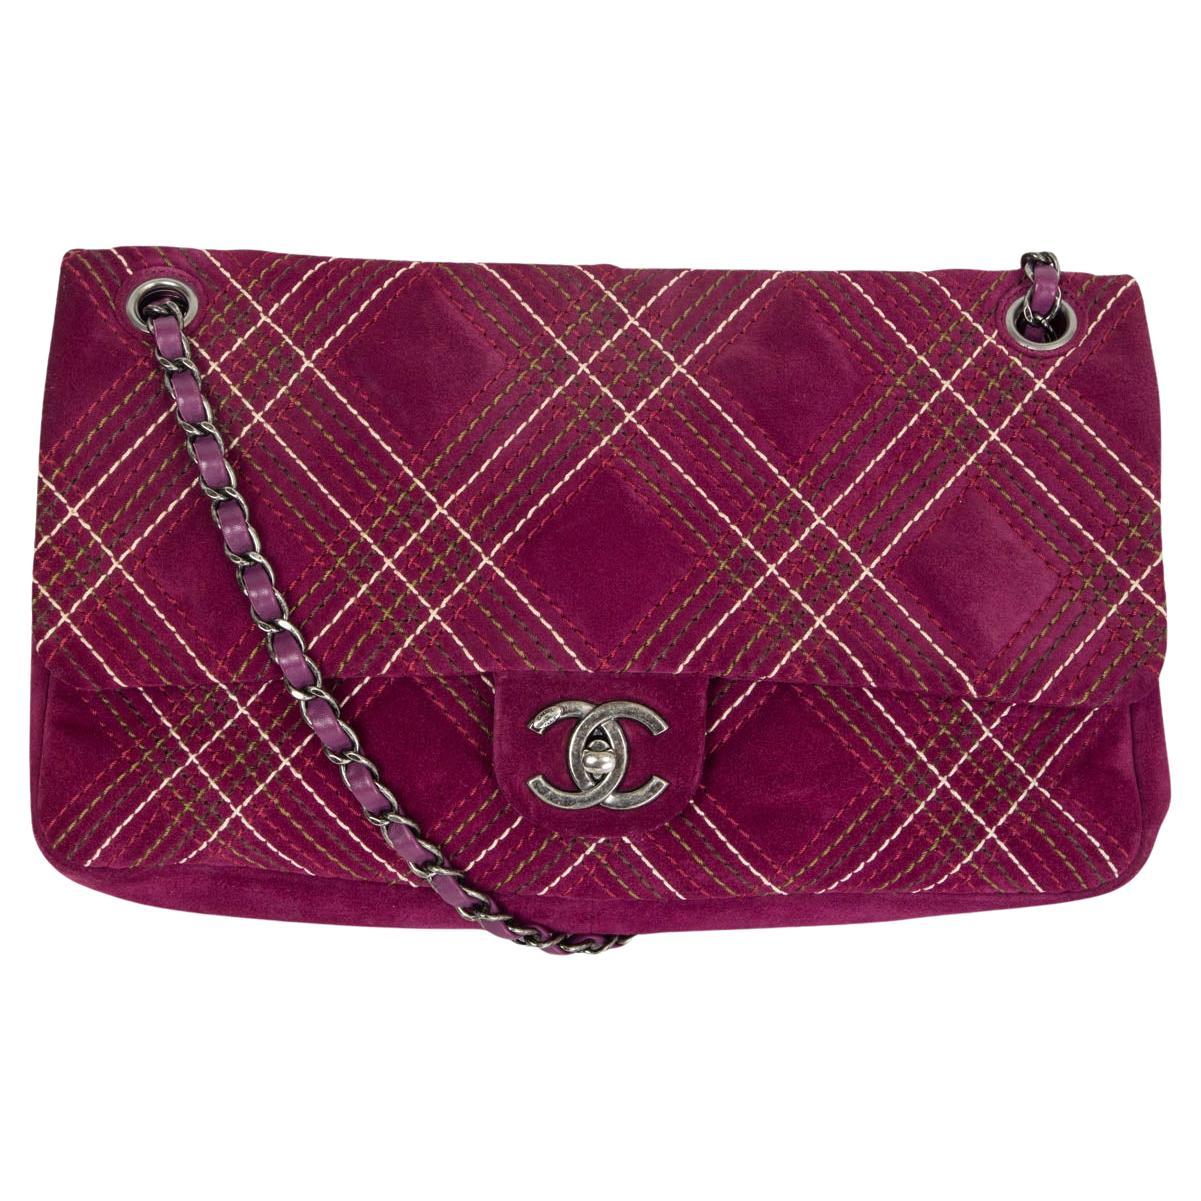 CHANLE purple suede 2013 EDINBURGH SALTIRE MEDIUM FLAP Shoulder Bag 13A